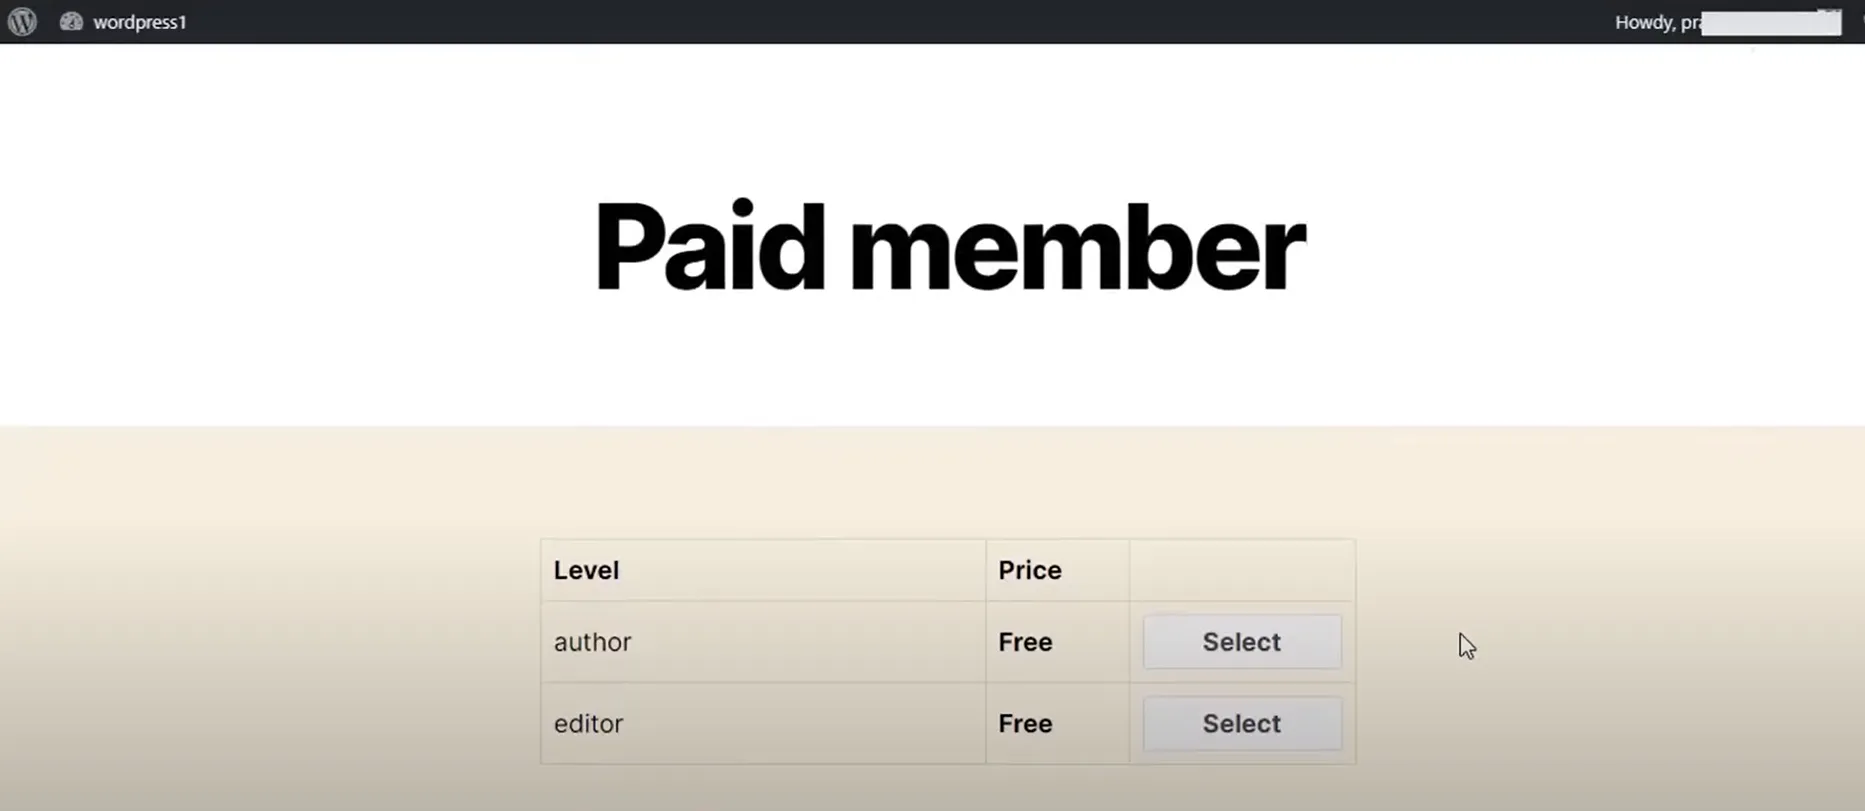 Social login for paid membership proassign membership level WordPress Paid Membership Pro Login